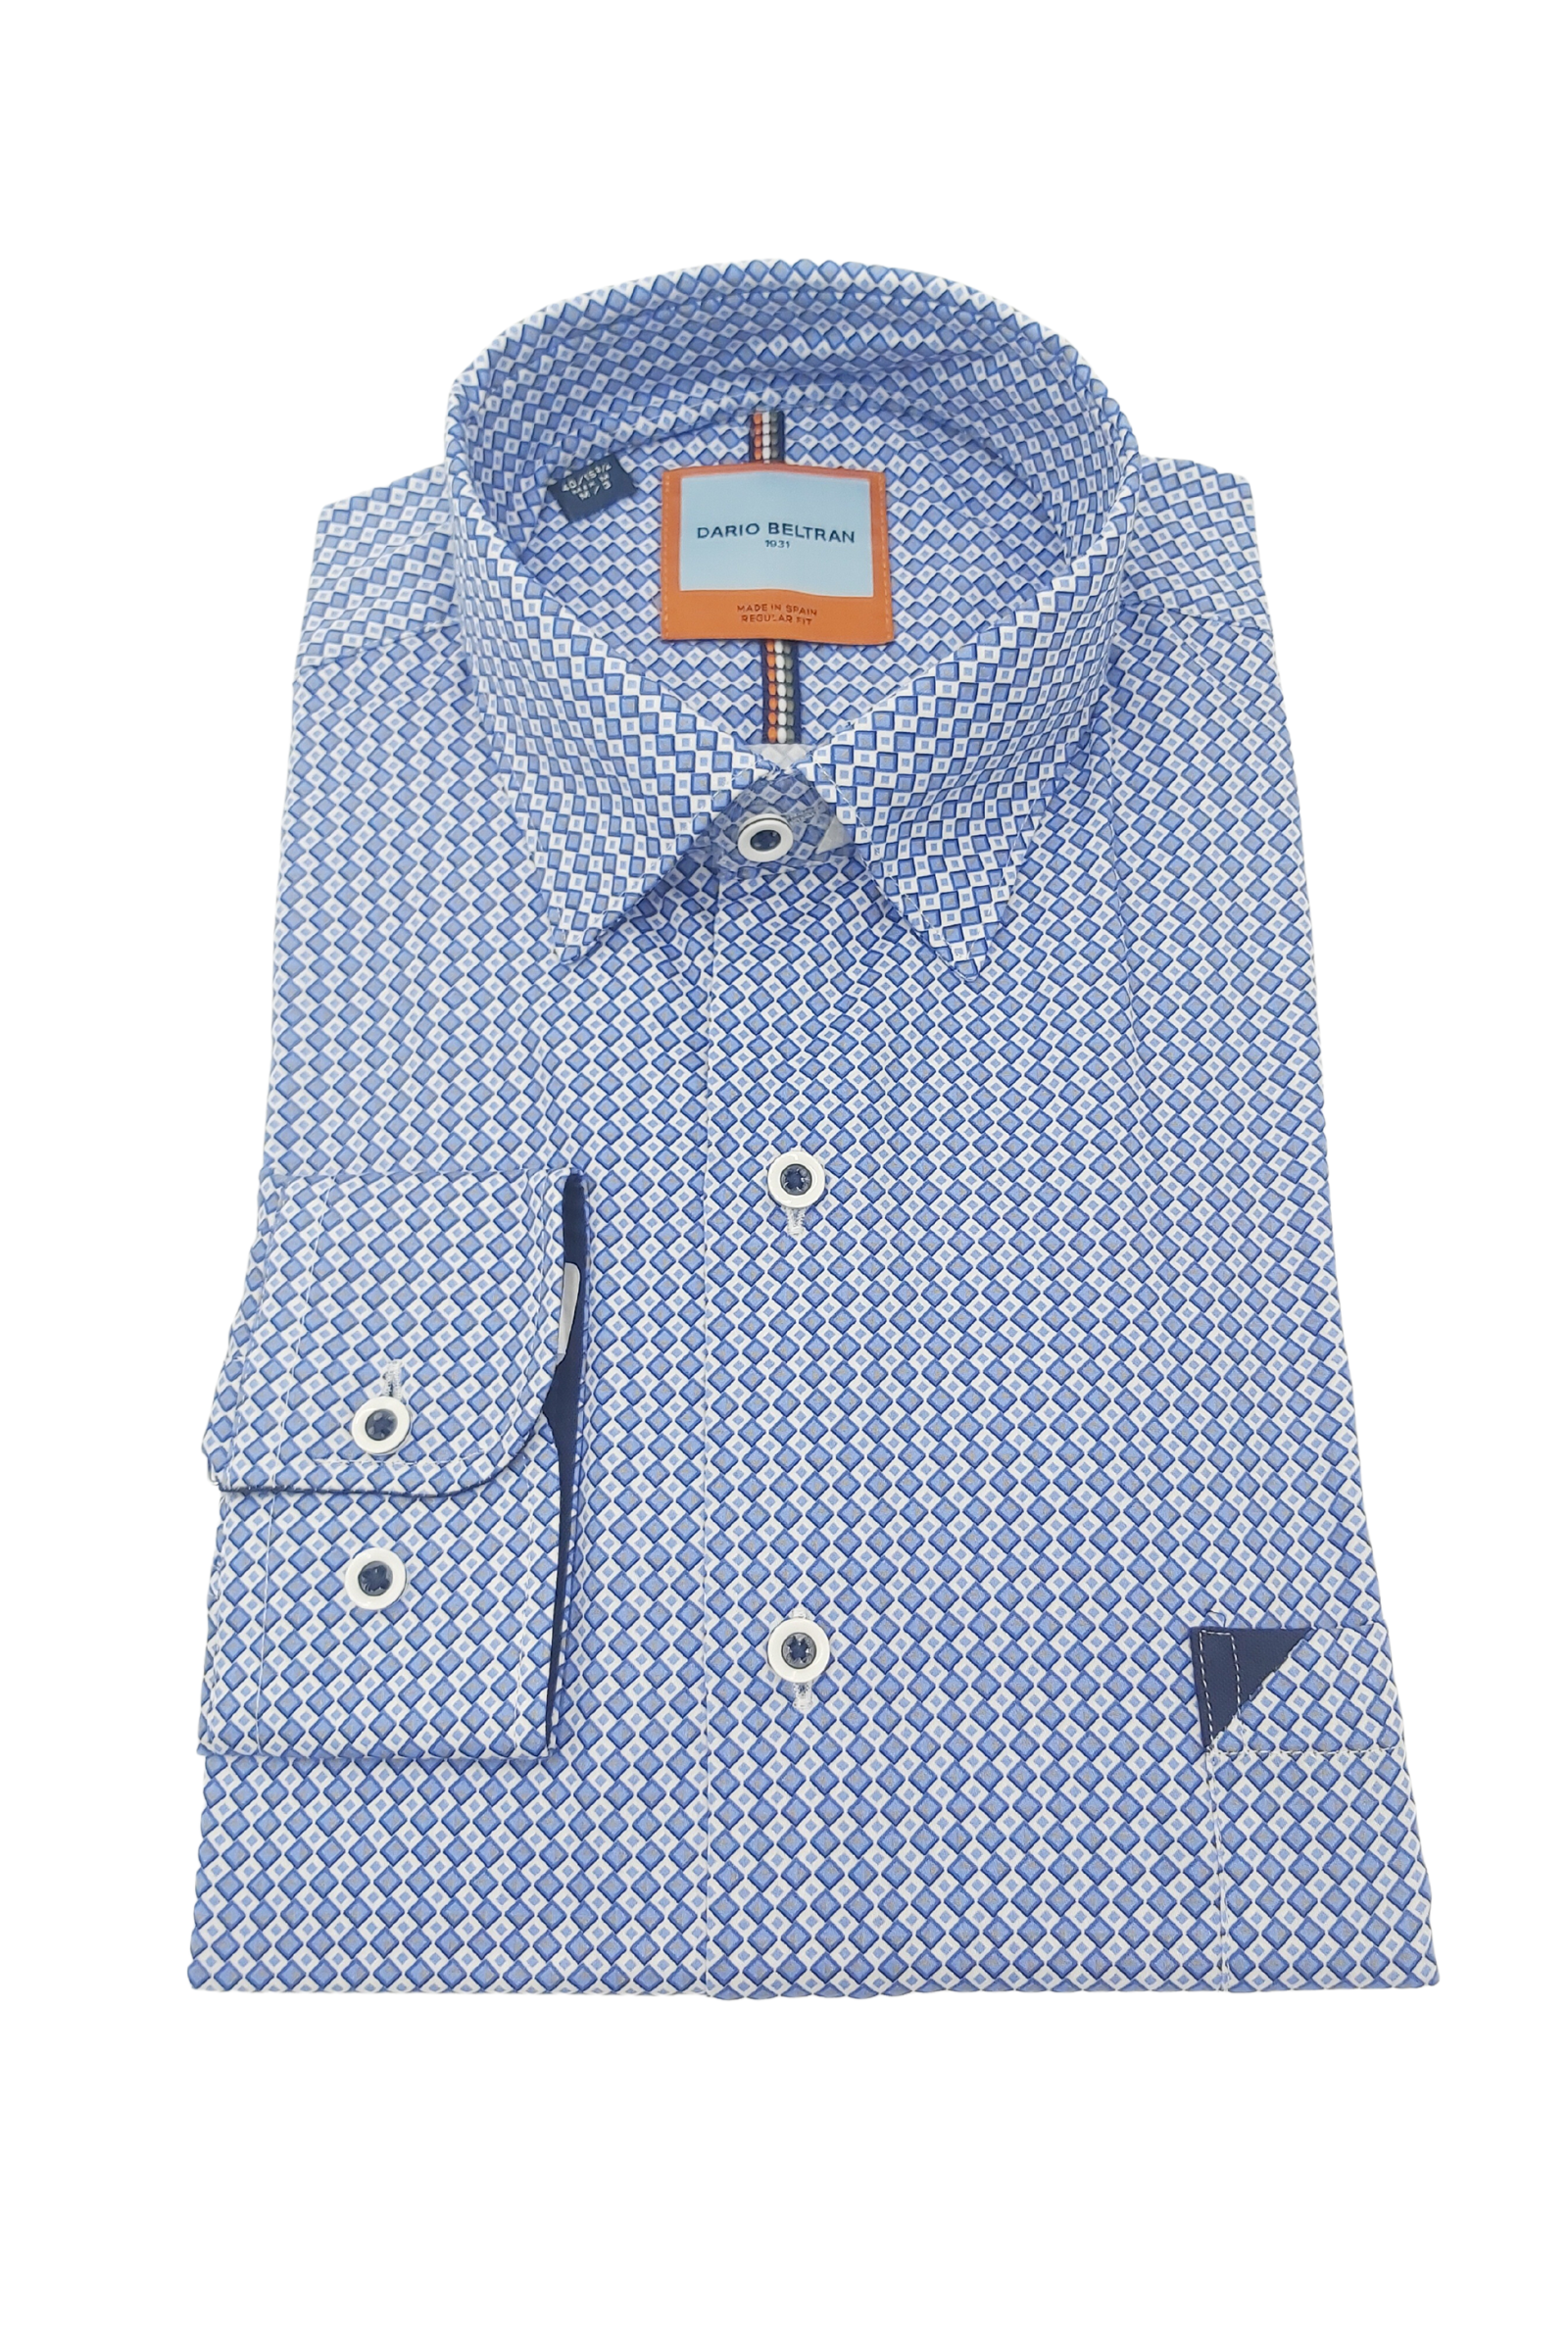 Men's Arrubal Blue/White Diamond Pattern Shirt-Front View